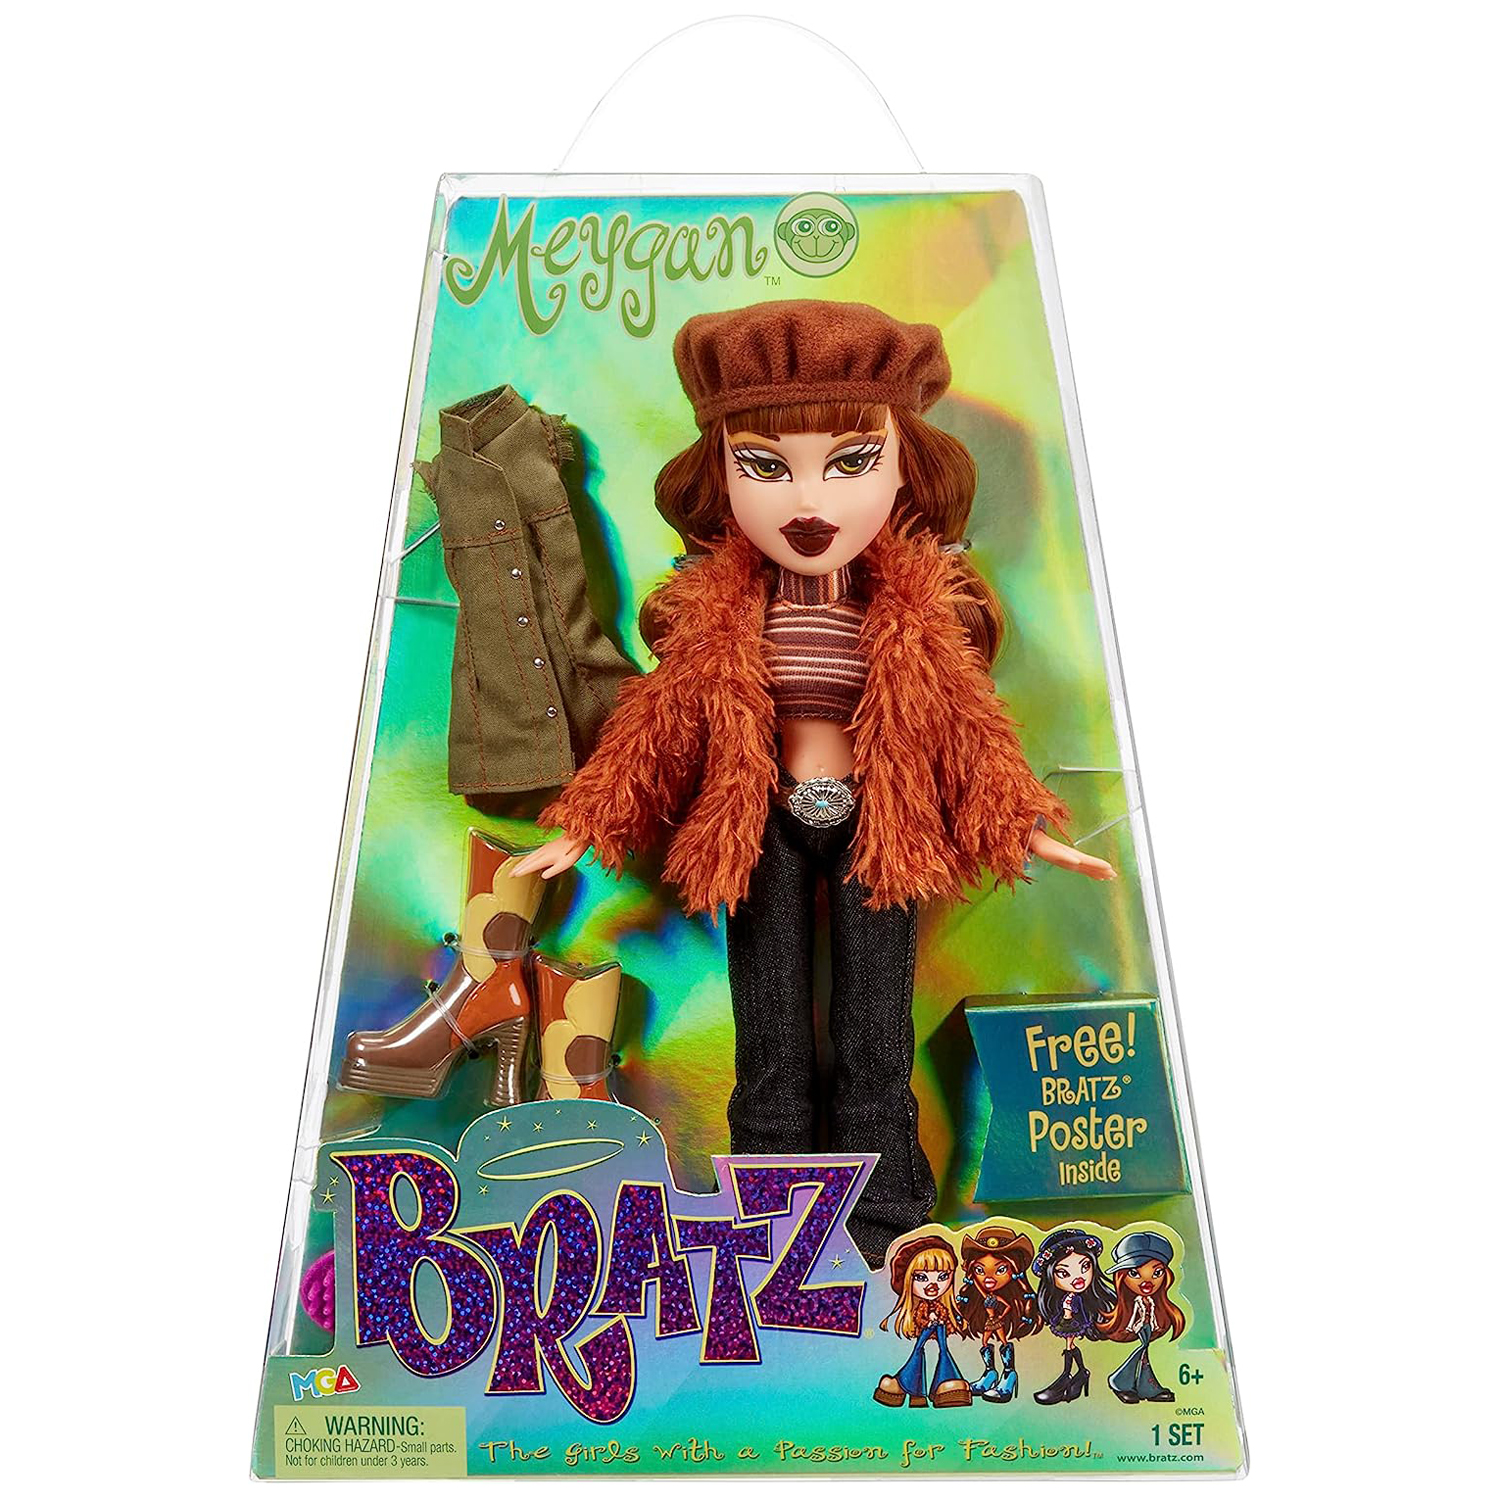 Bratz Bratz Reproductions Core, Series 2 Dolls | The Toy Pool